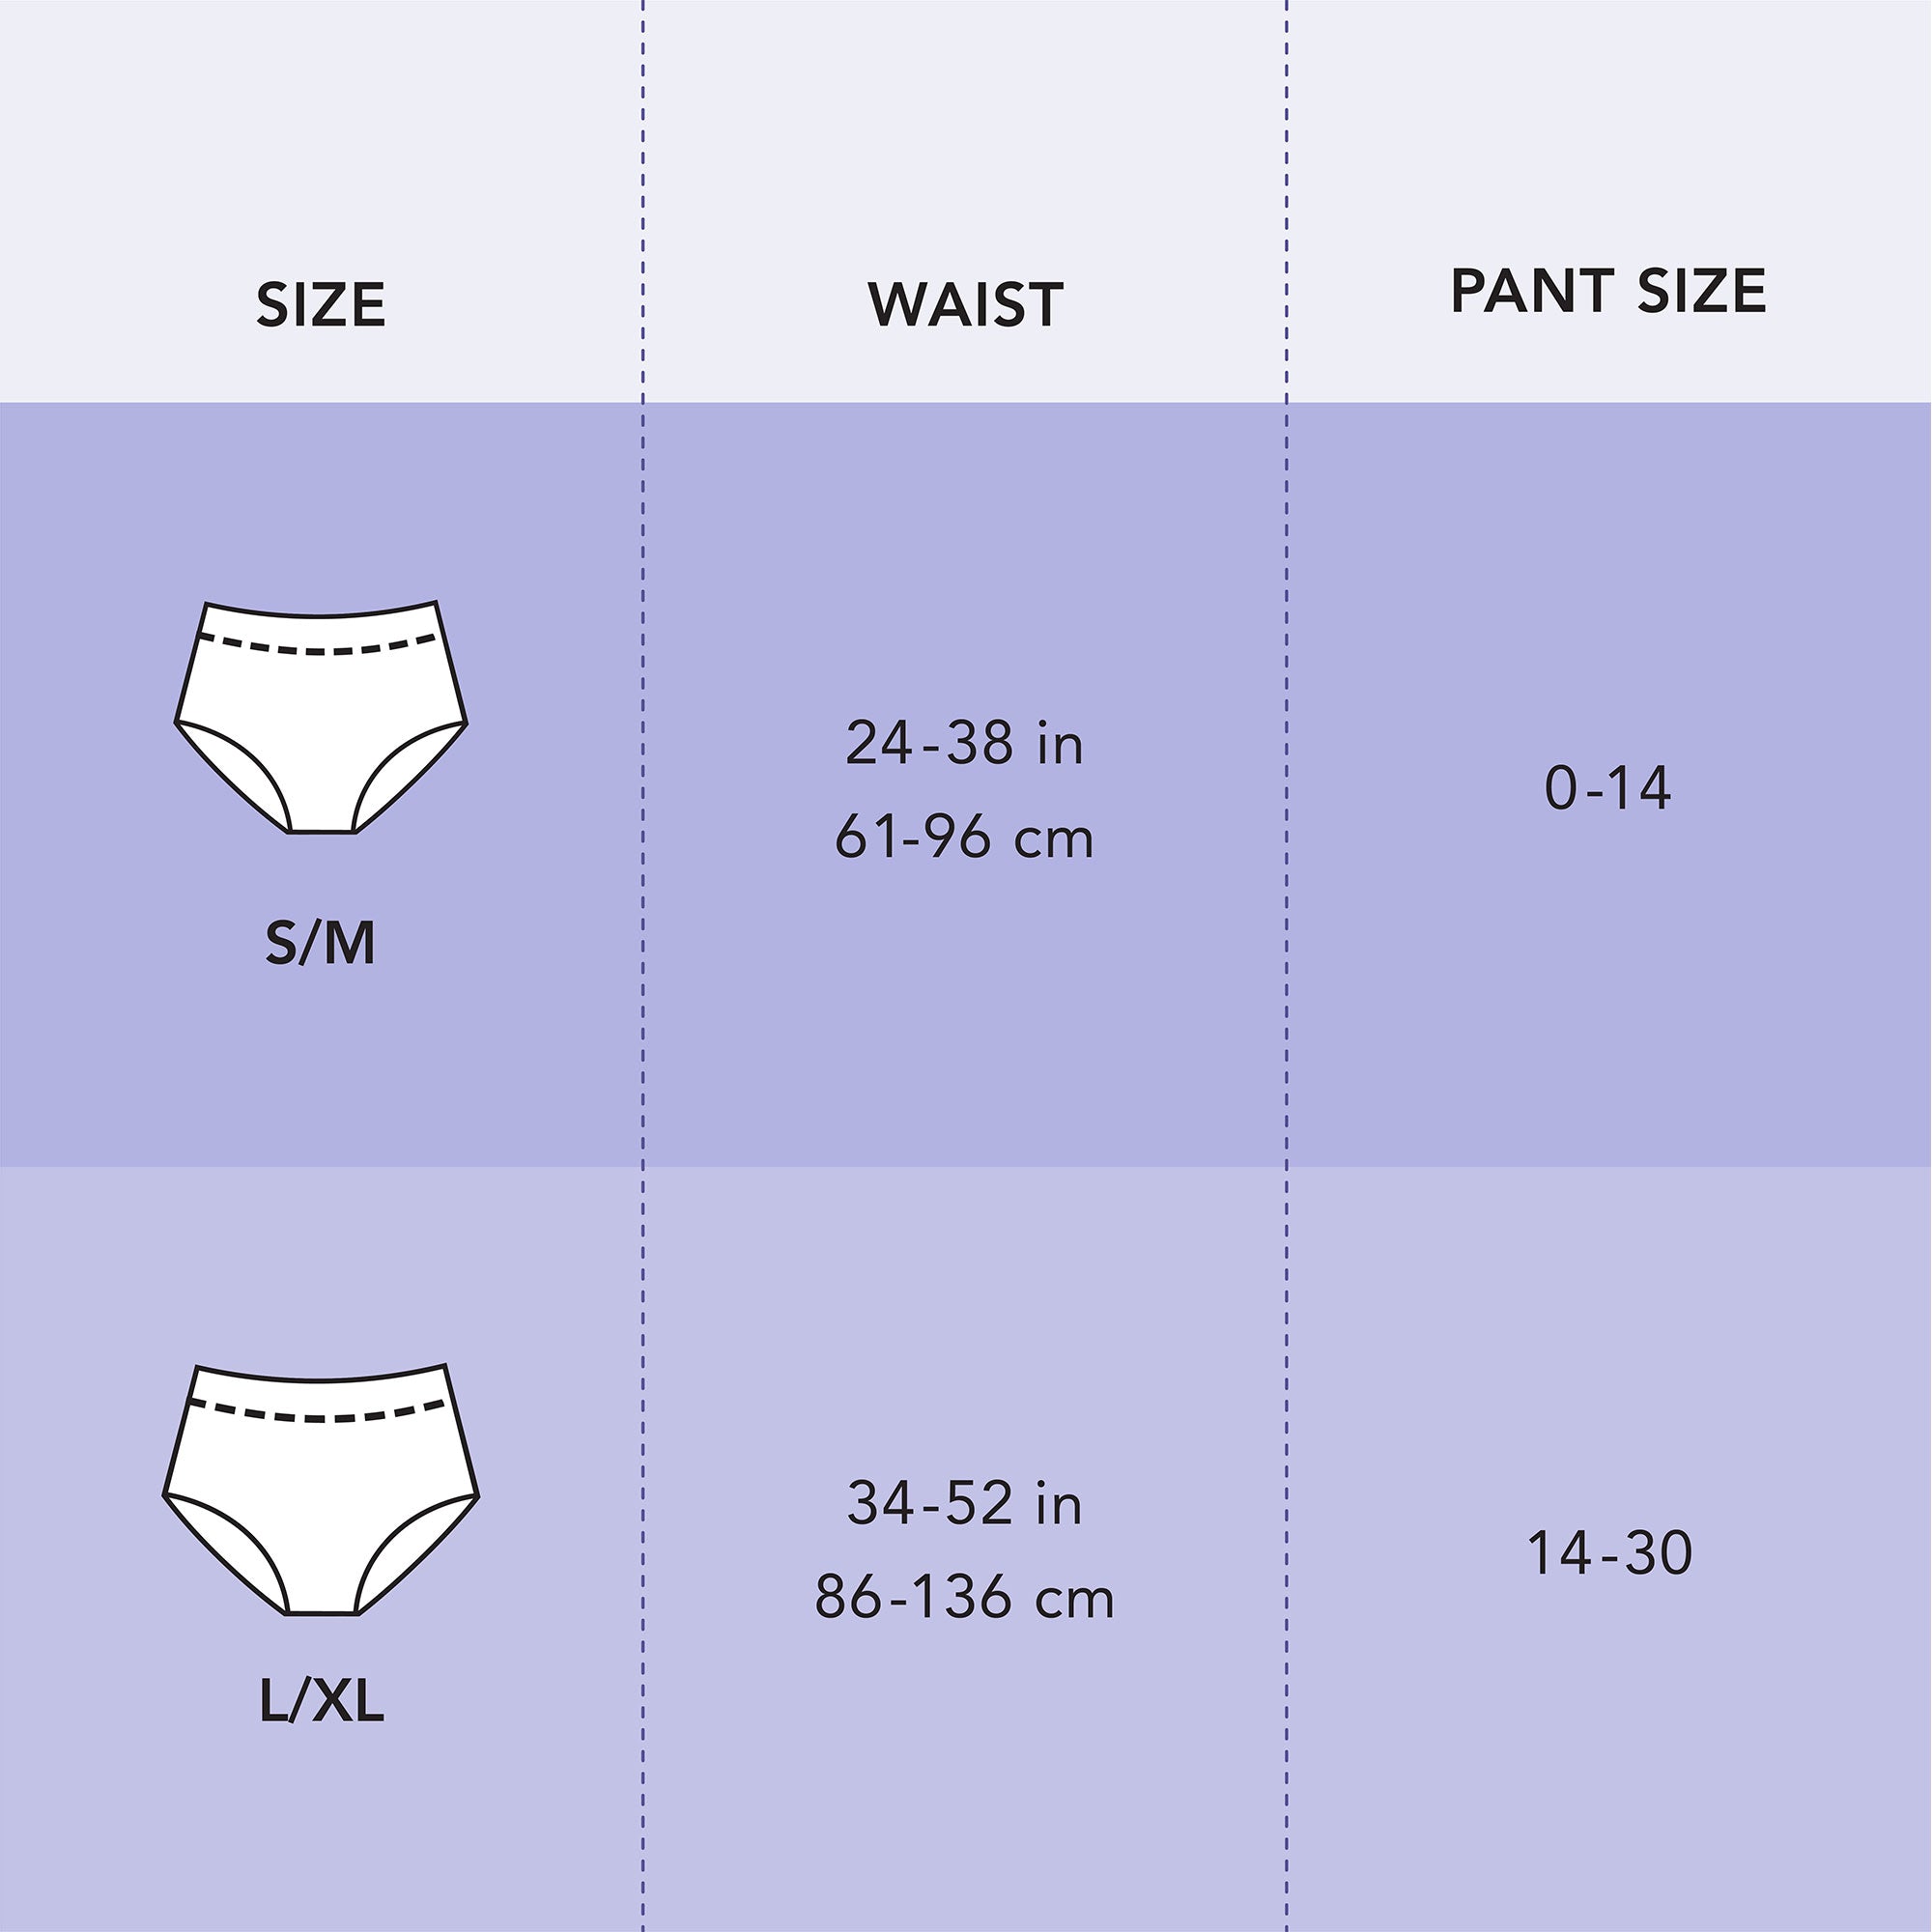 Rael Organic Cotton Period Underwear 5s (L/XL)